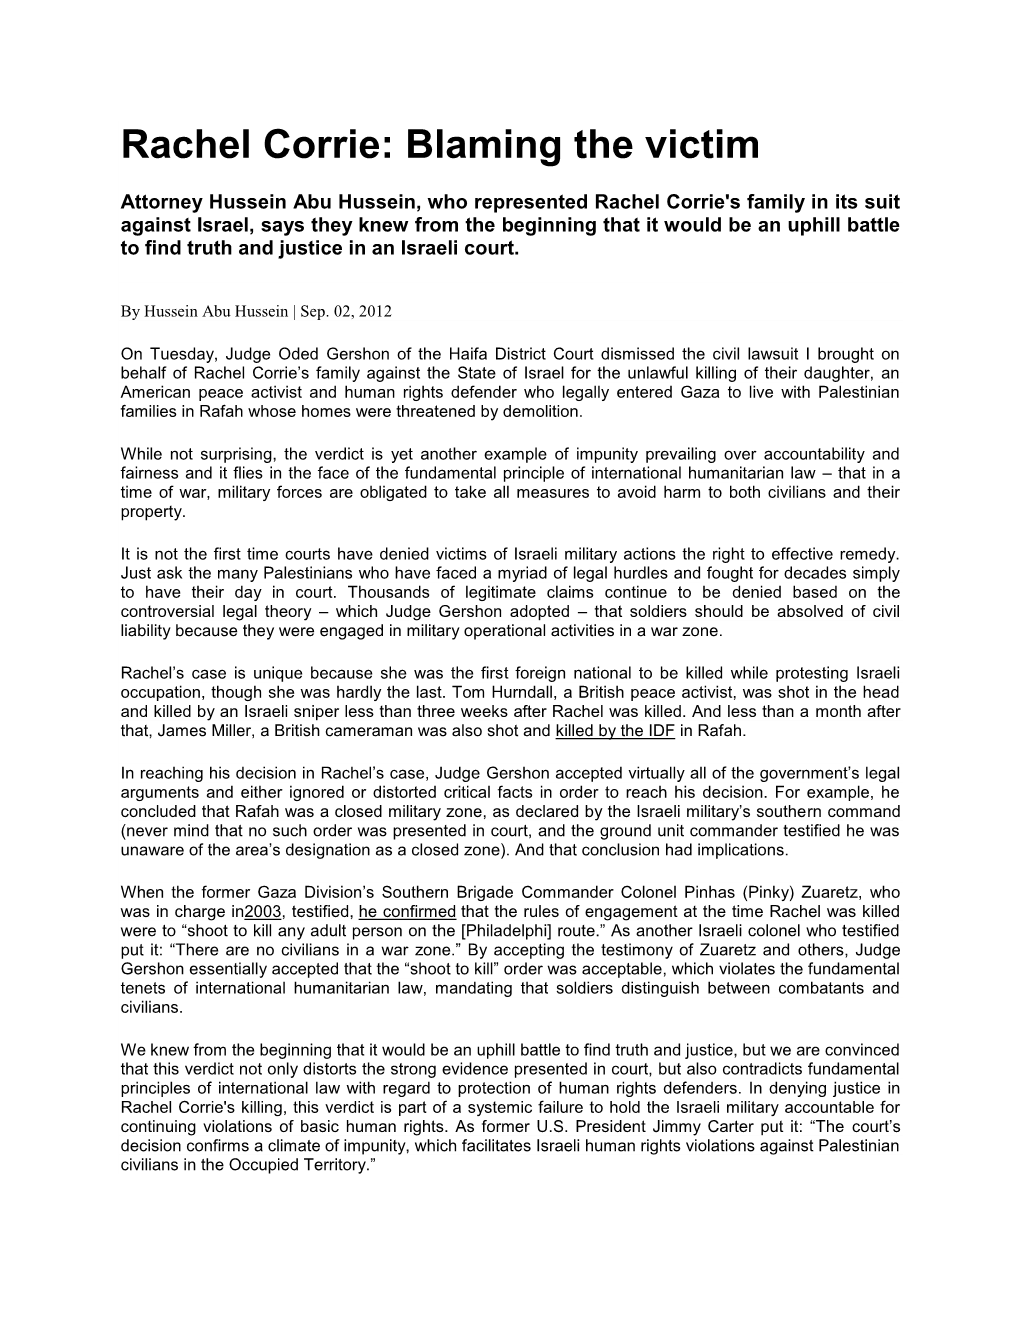 Rachel Corrie: Blaming the Victim